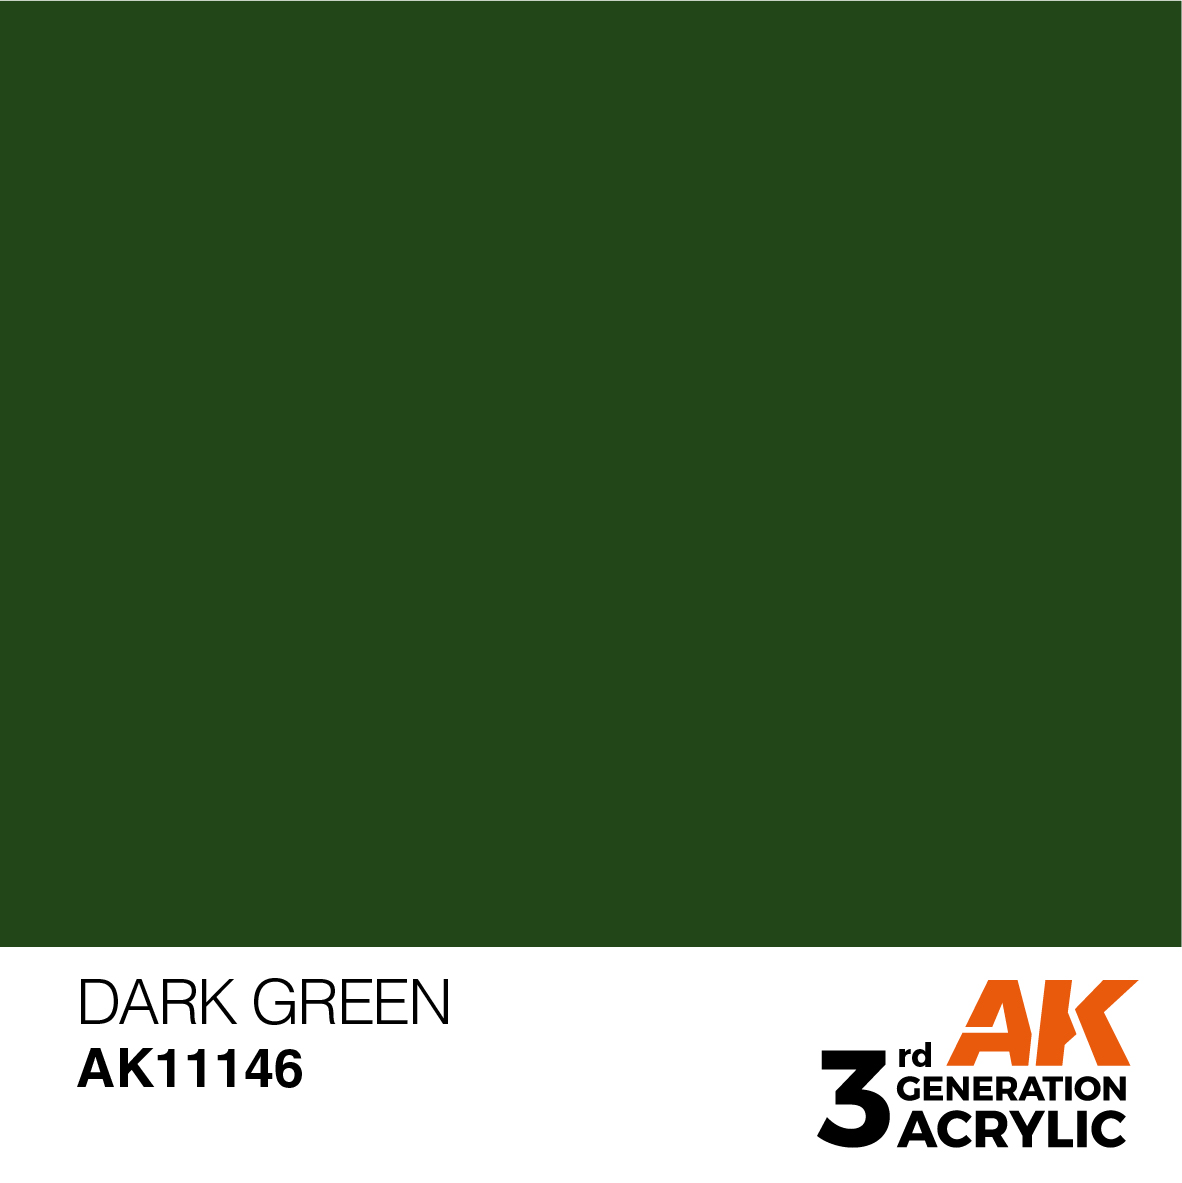 AK11146 Dark Green (3rd-Generation) (17mL)